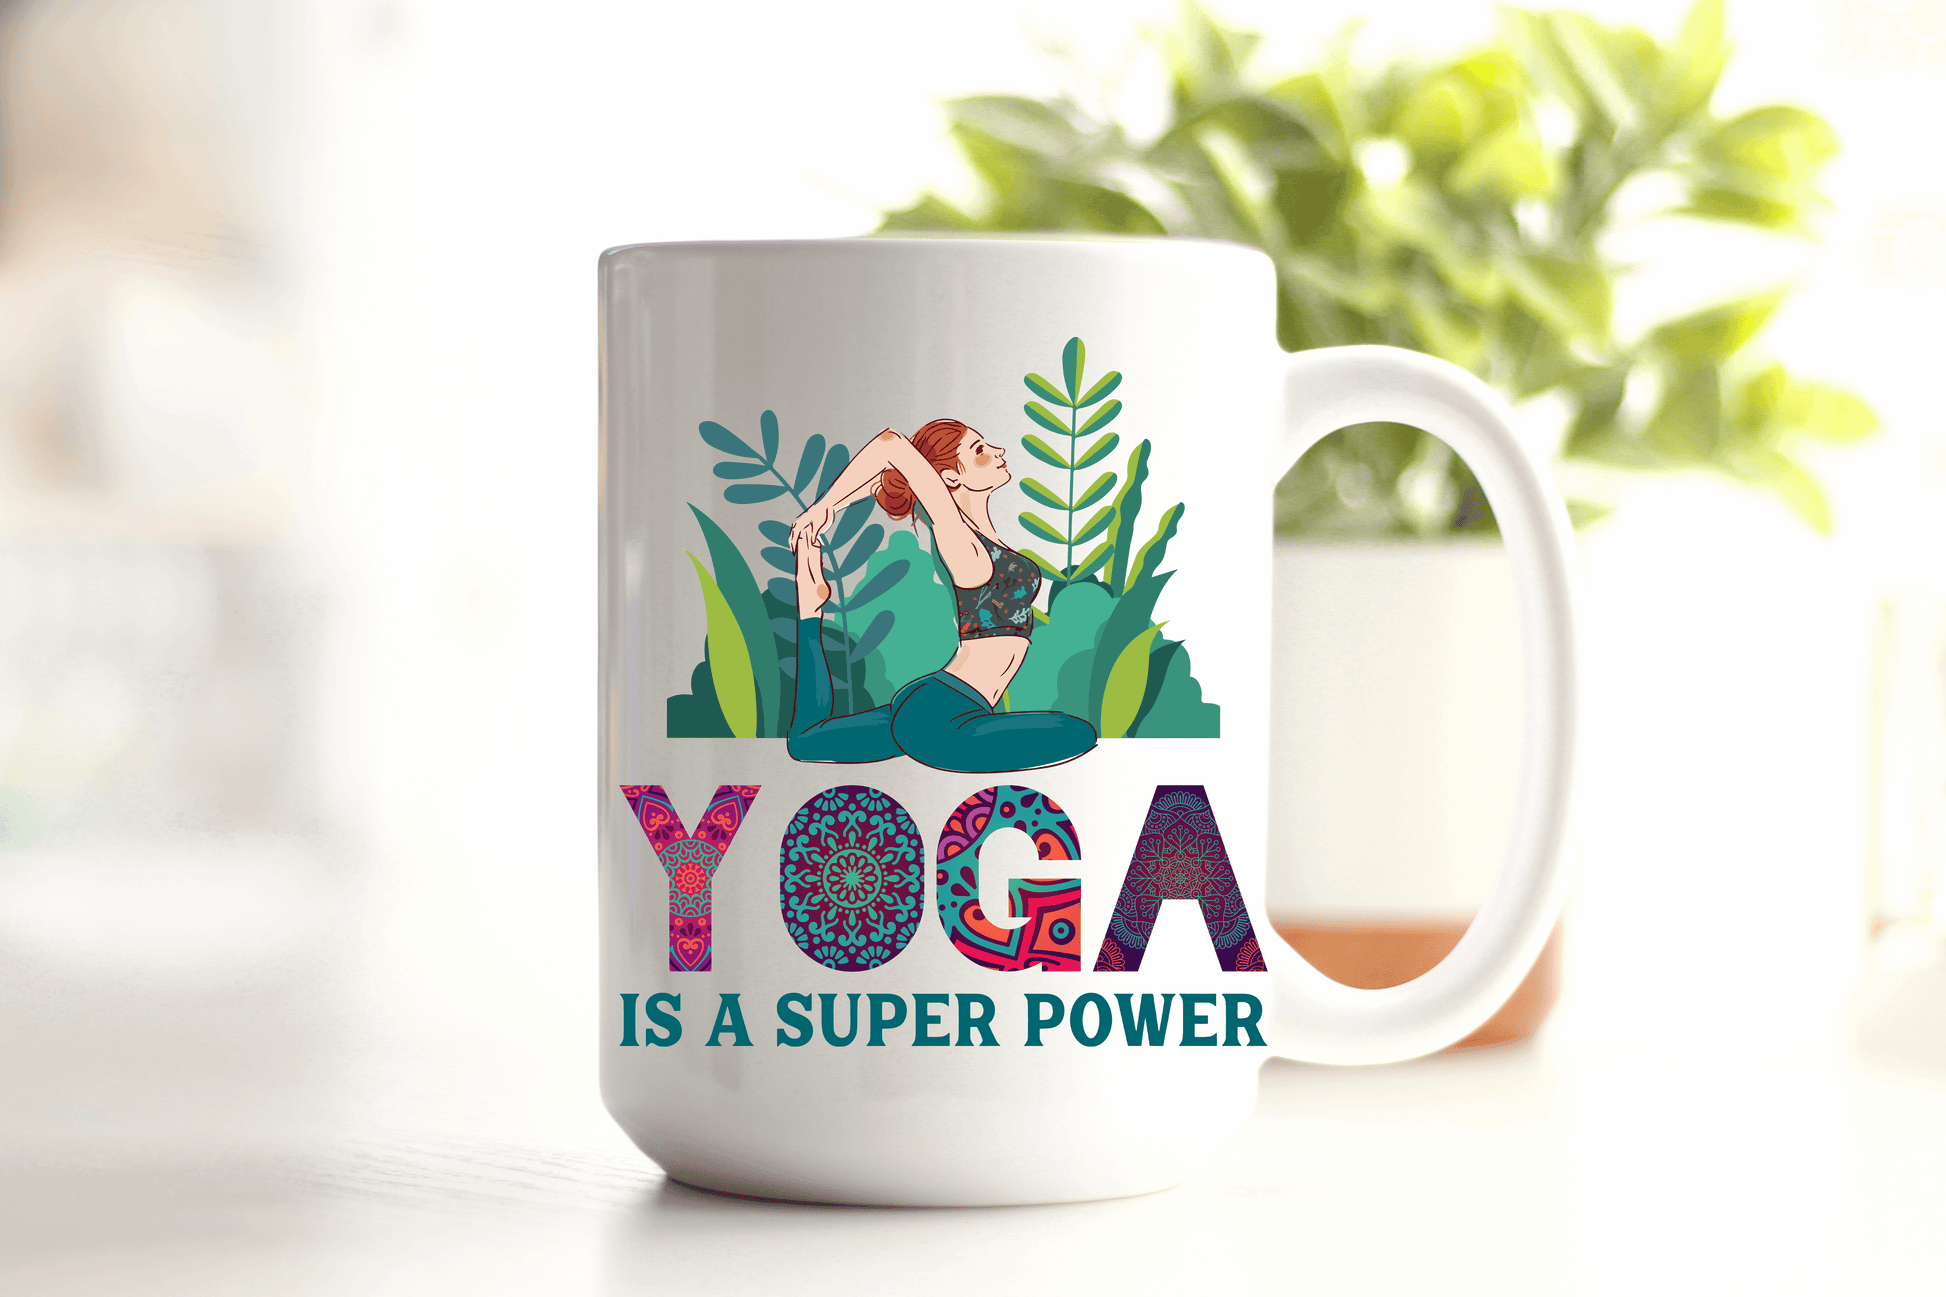  Yoga is a Super Power Coffee Mug by Free Spirit Accessories sold by Free Spirit Accessories